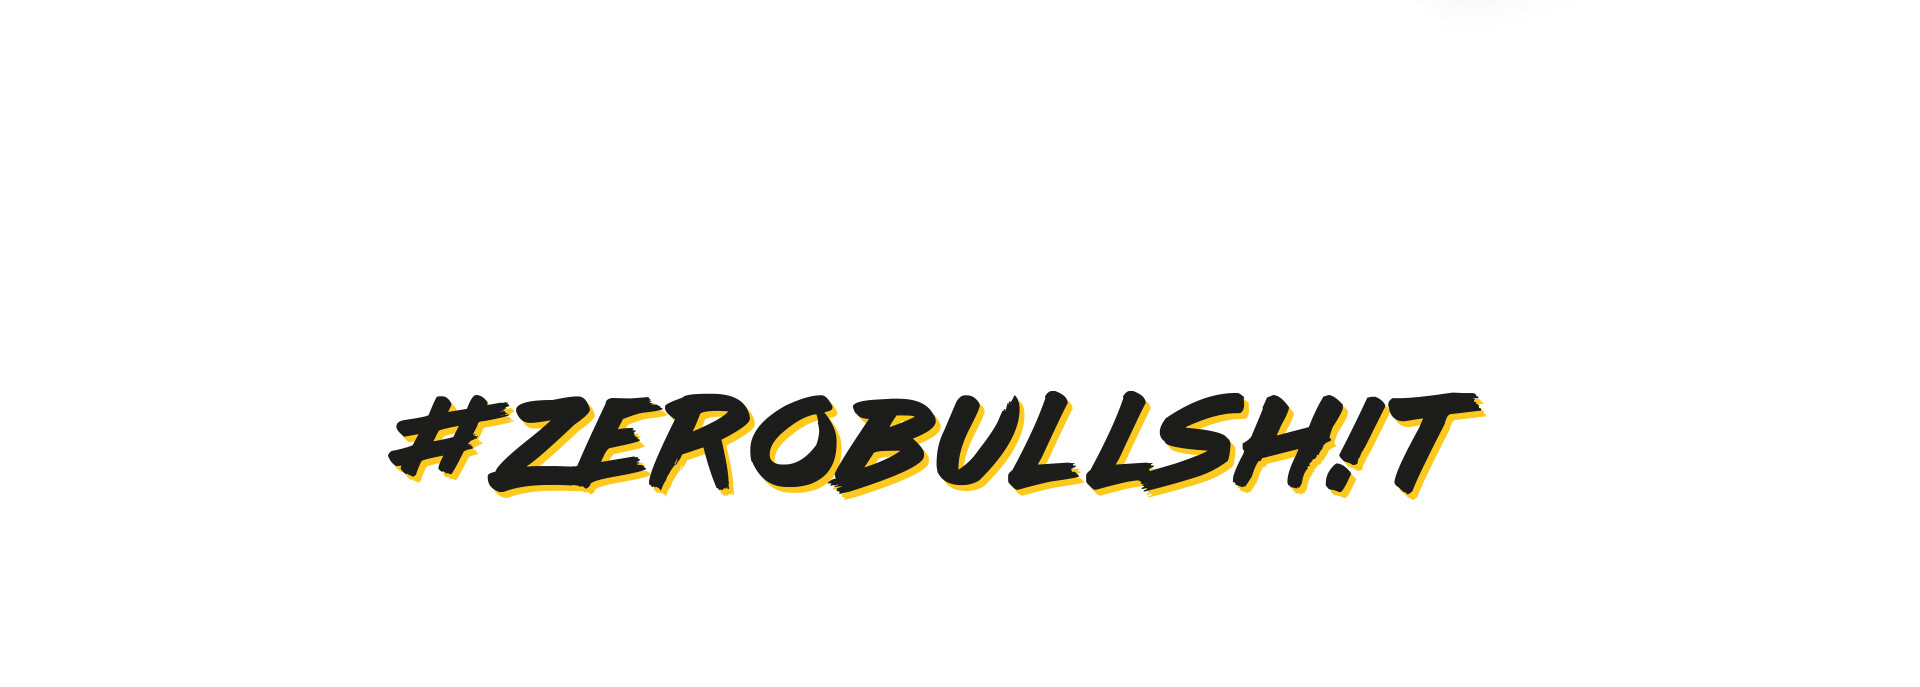 Slogan #zerobullshit